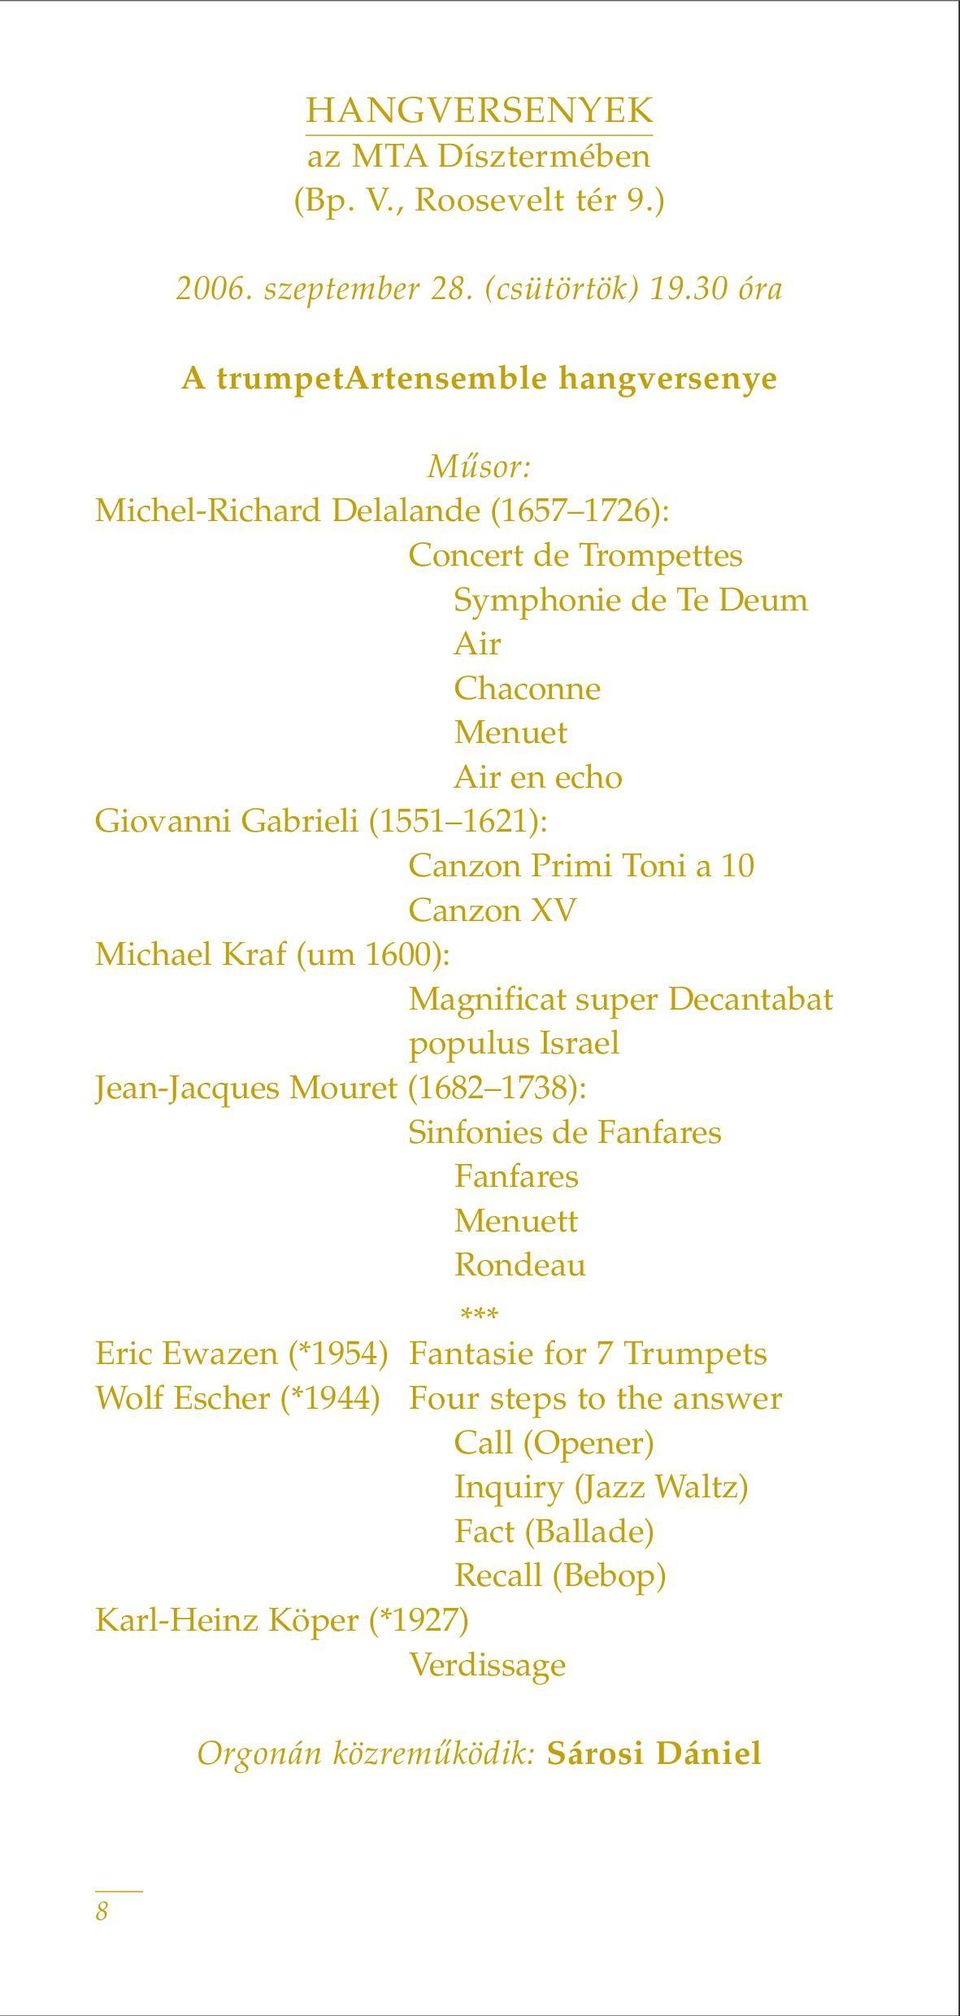 (1551 1621): Canzon Primi Toni a 10 Canzon XV Michael Kraf (um 1600): Magnificat super Decantabat populus Israel Jean-Jacques Mouret (1682 1738): Sinfonies de Fanfares